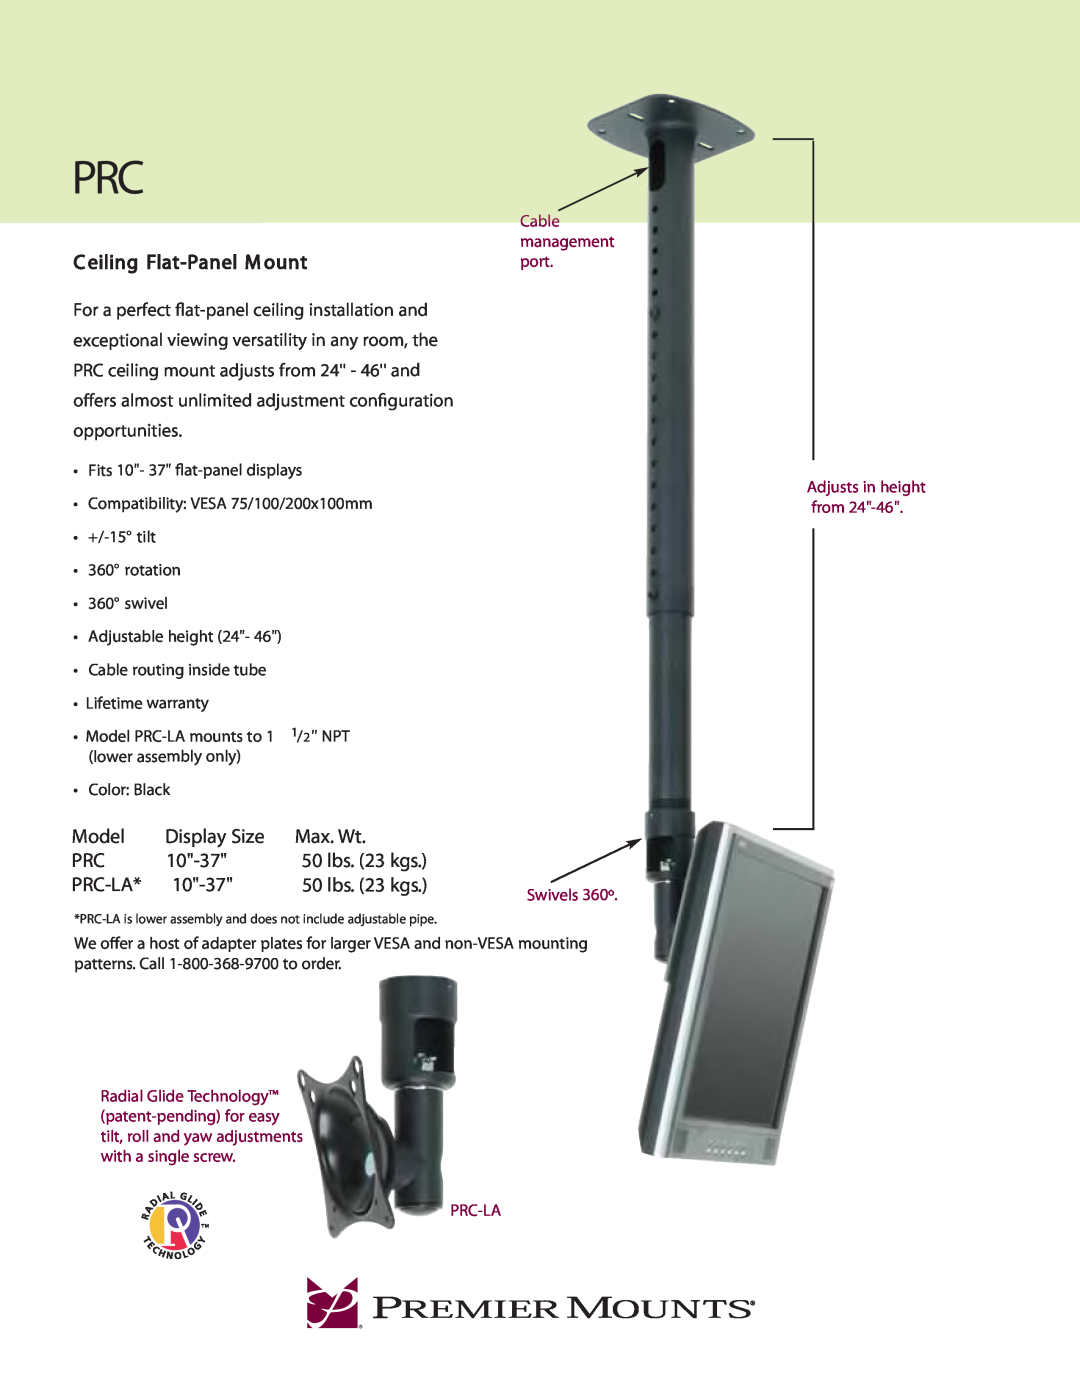 Premier Mounts PRC-LA warranty C eiling Flat-PanelM ount, Model, Display Size, Max. Wt, 10-37, 50 lbs. 23 kgs, Prc-La 